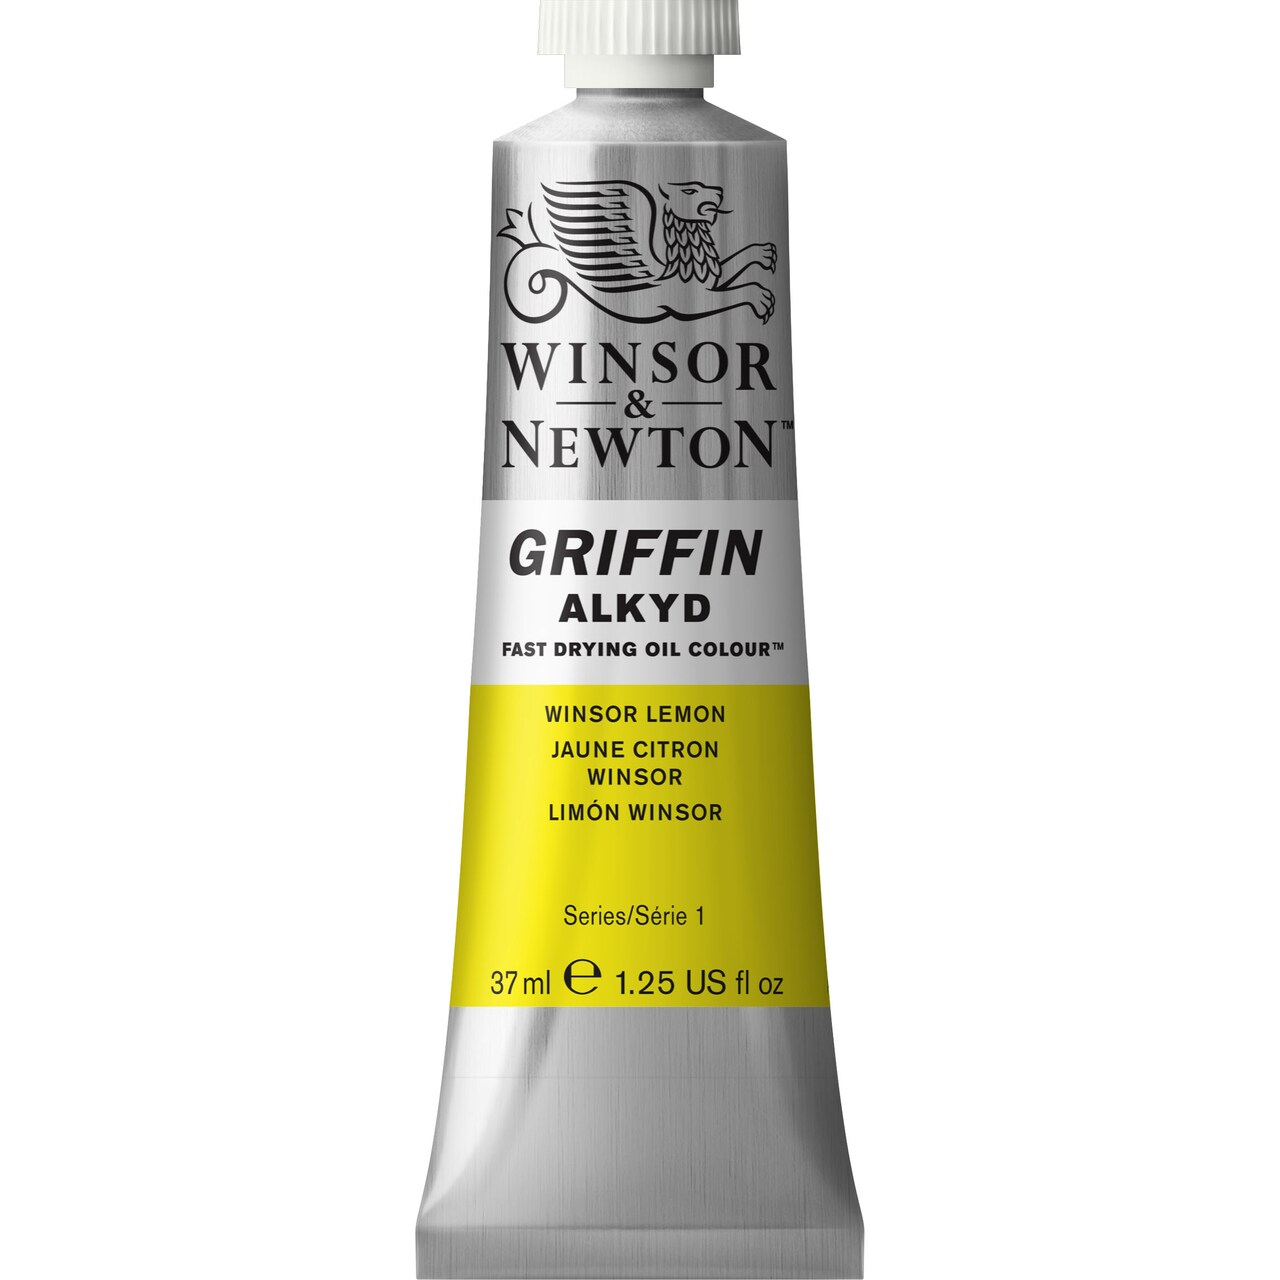 Winsor &#x26; Newton Griffin Alkyd Fast-Drying Oil Paint, 37Ml, Winsor Lemon